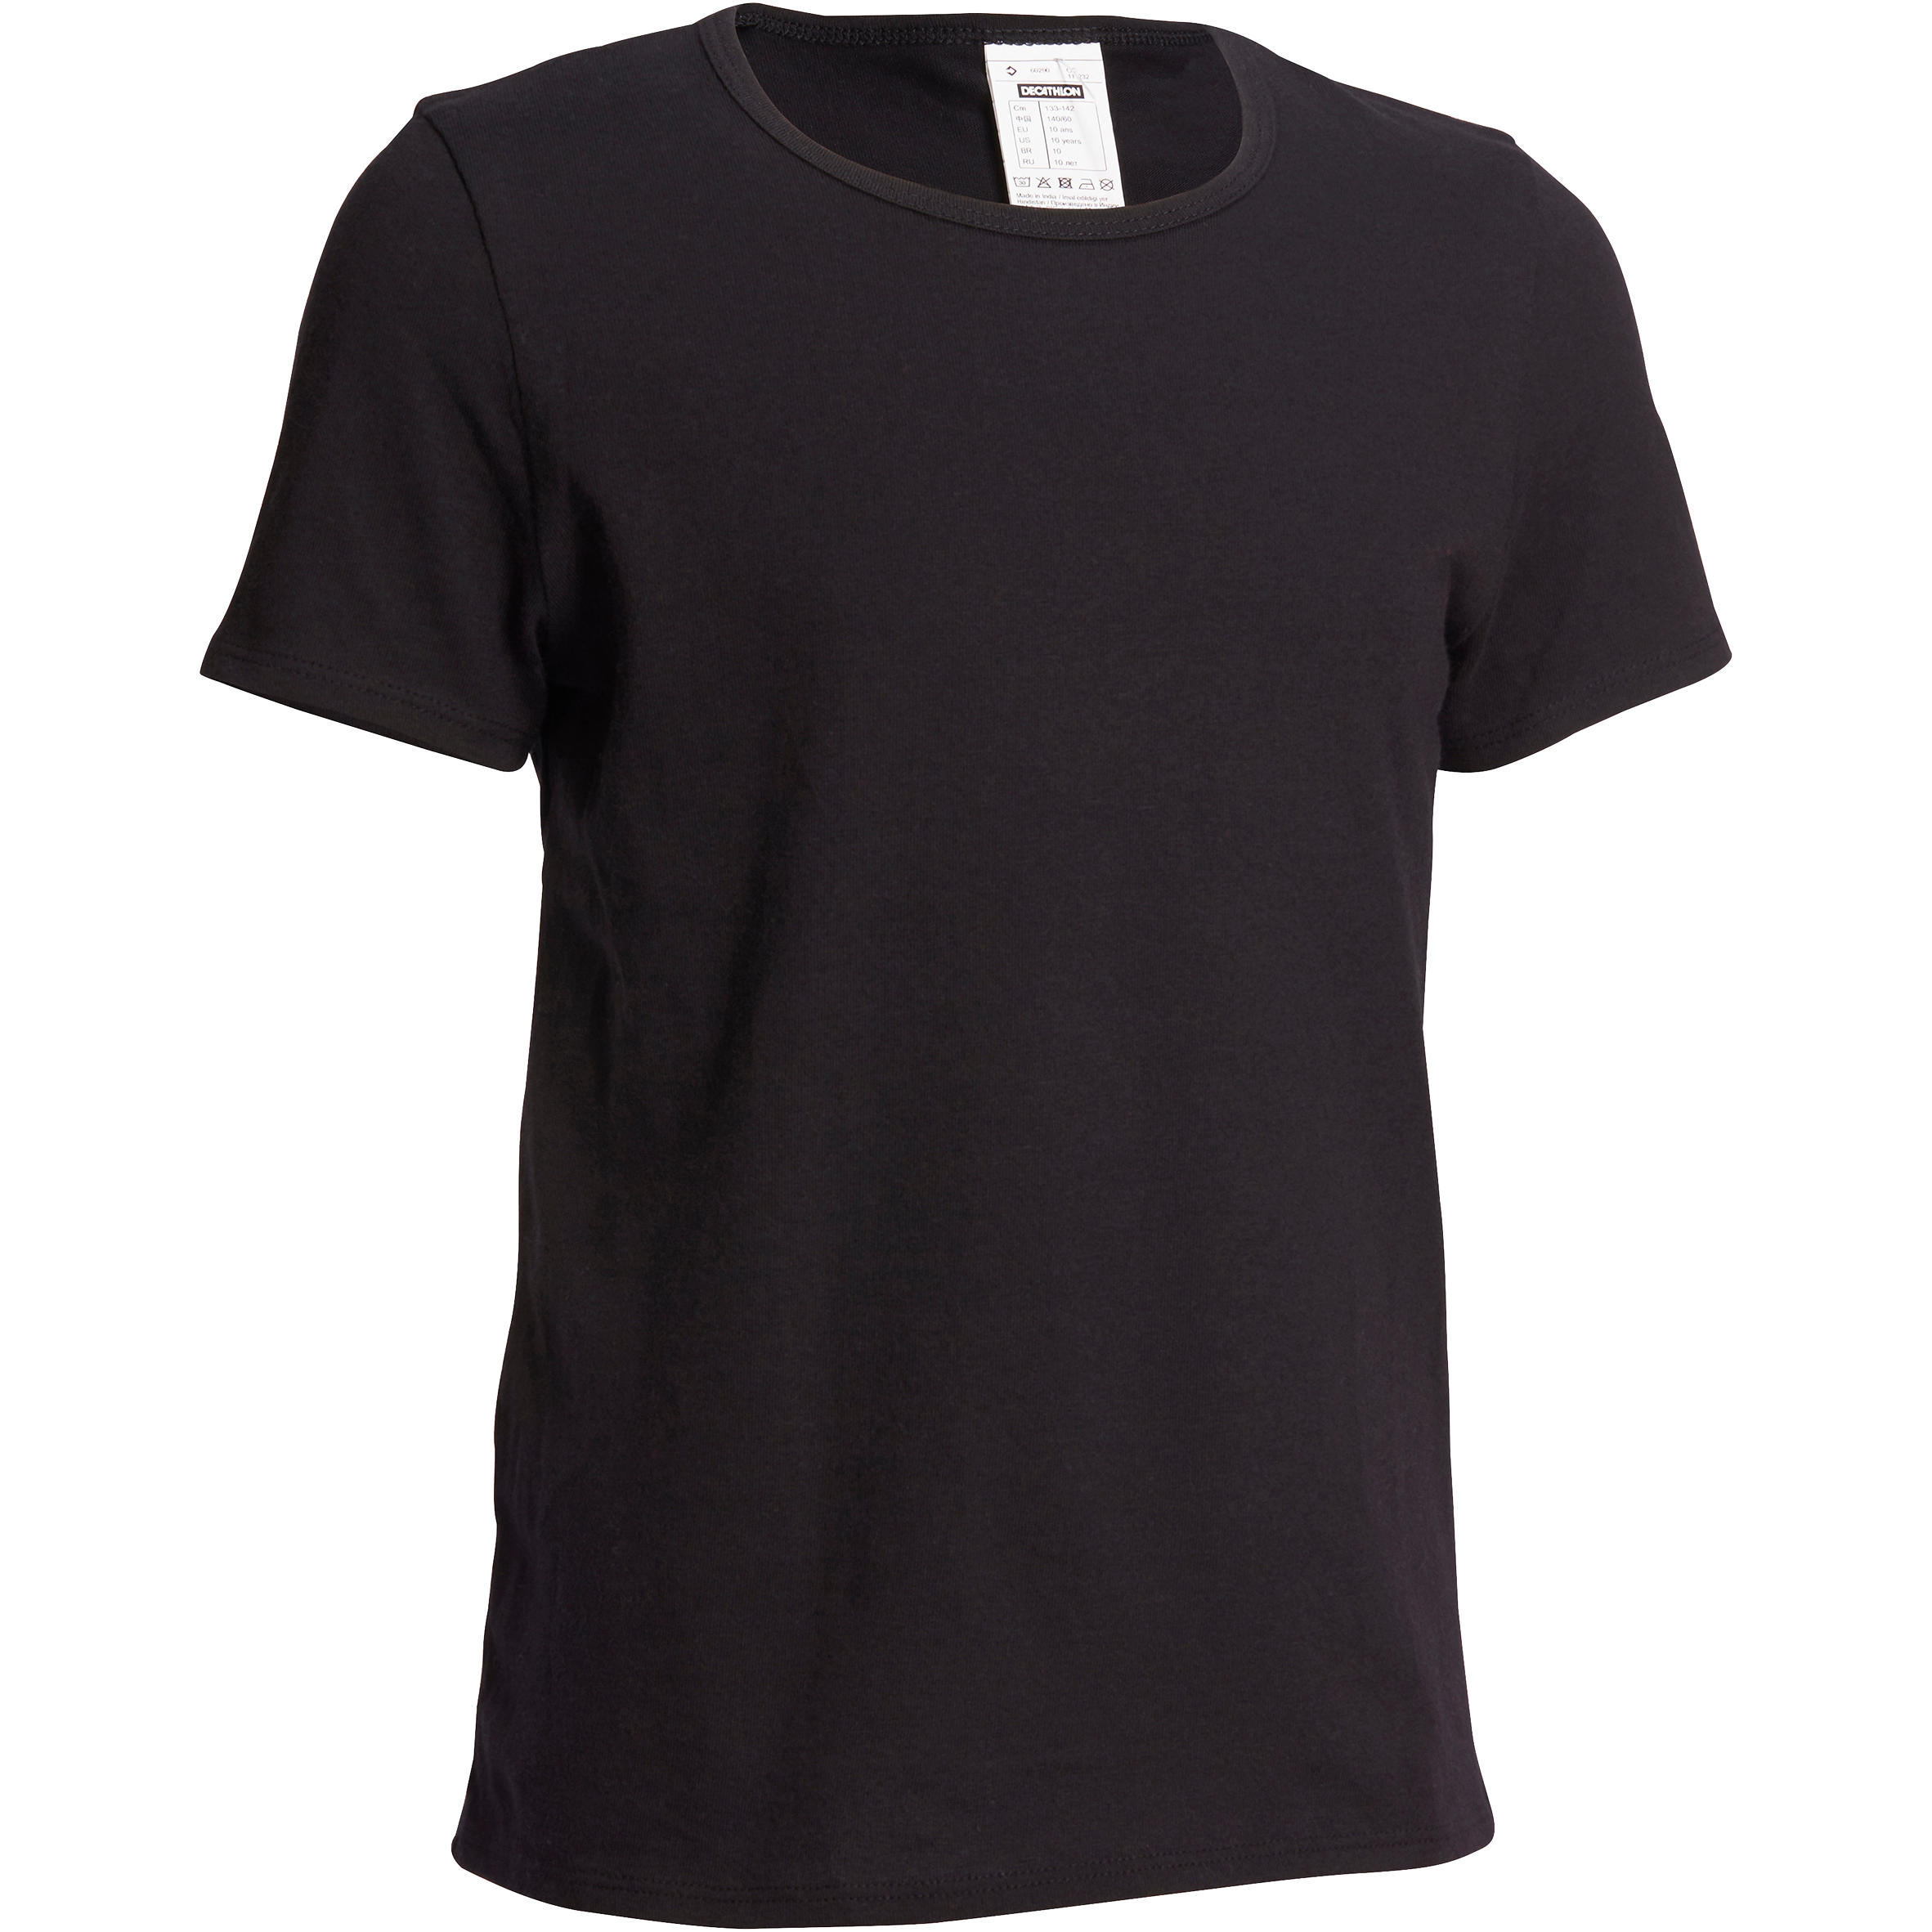 DOMYOS 100 Boys' Short-Sleeved Gym T-Shirt - Black